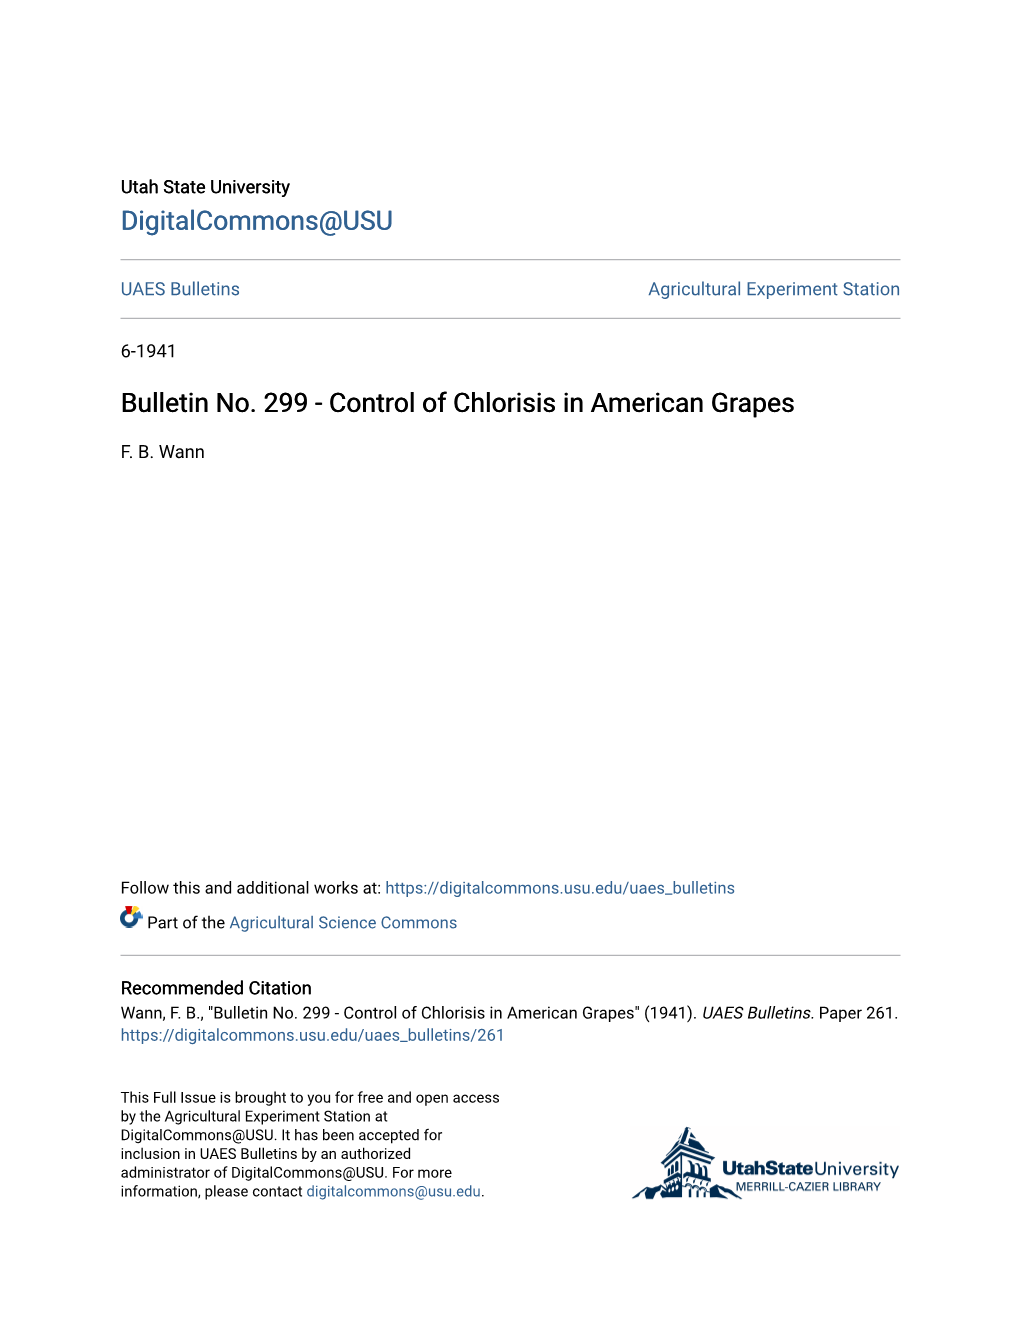 Bulletin No. 299-Control of Chlorisis in American Grapes